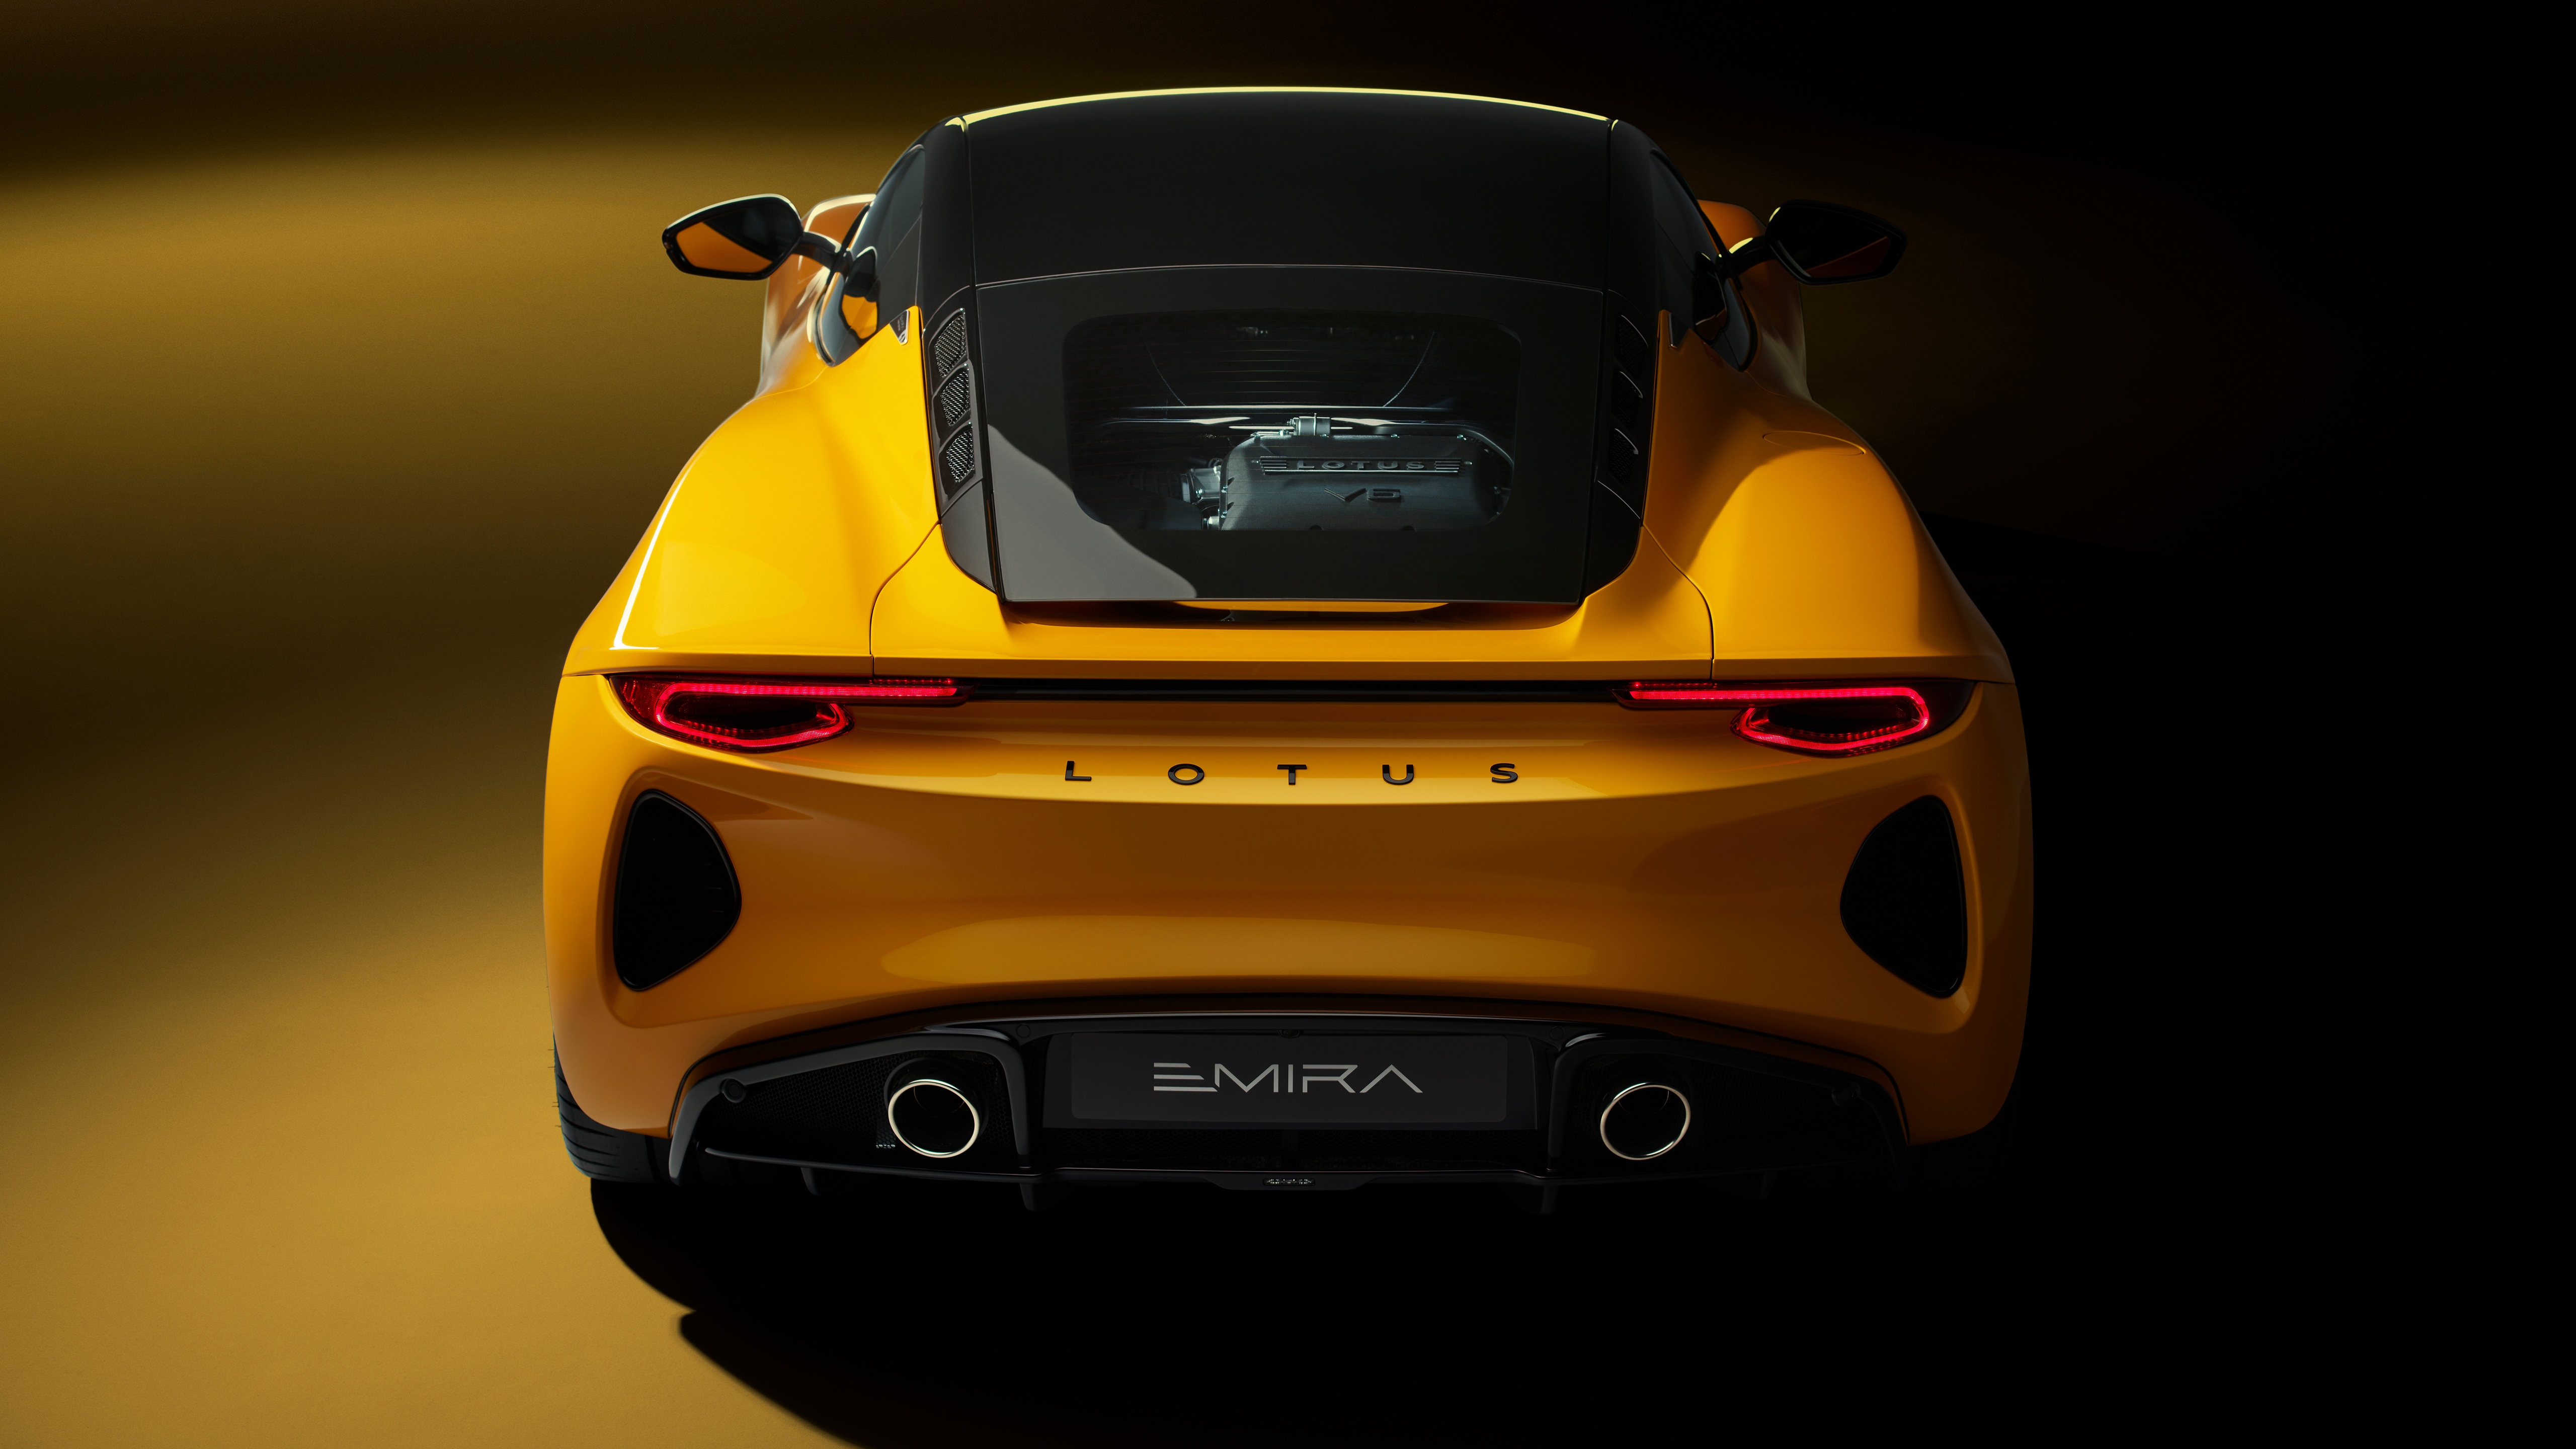 Lotus Emira 2022 in yellow